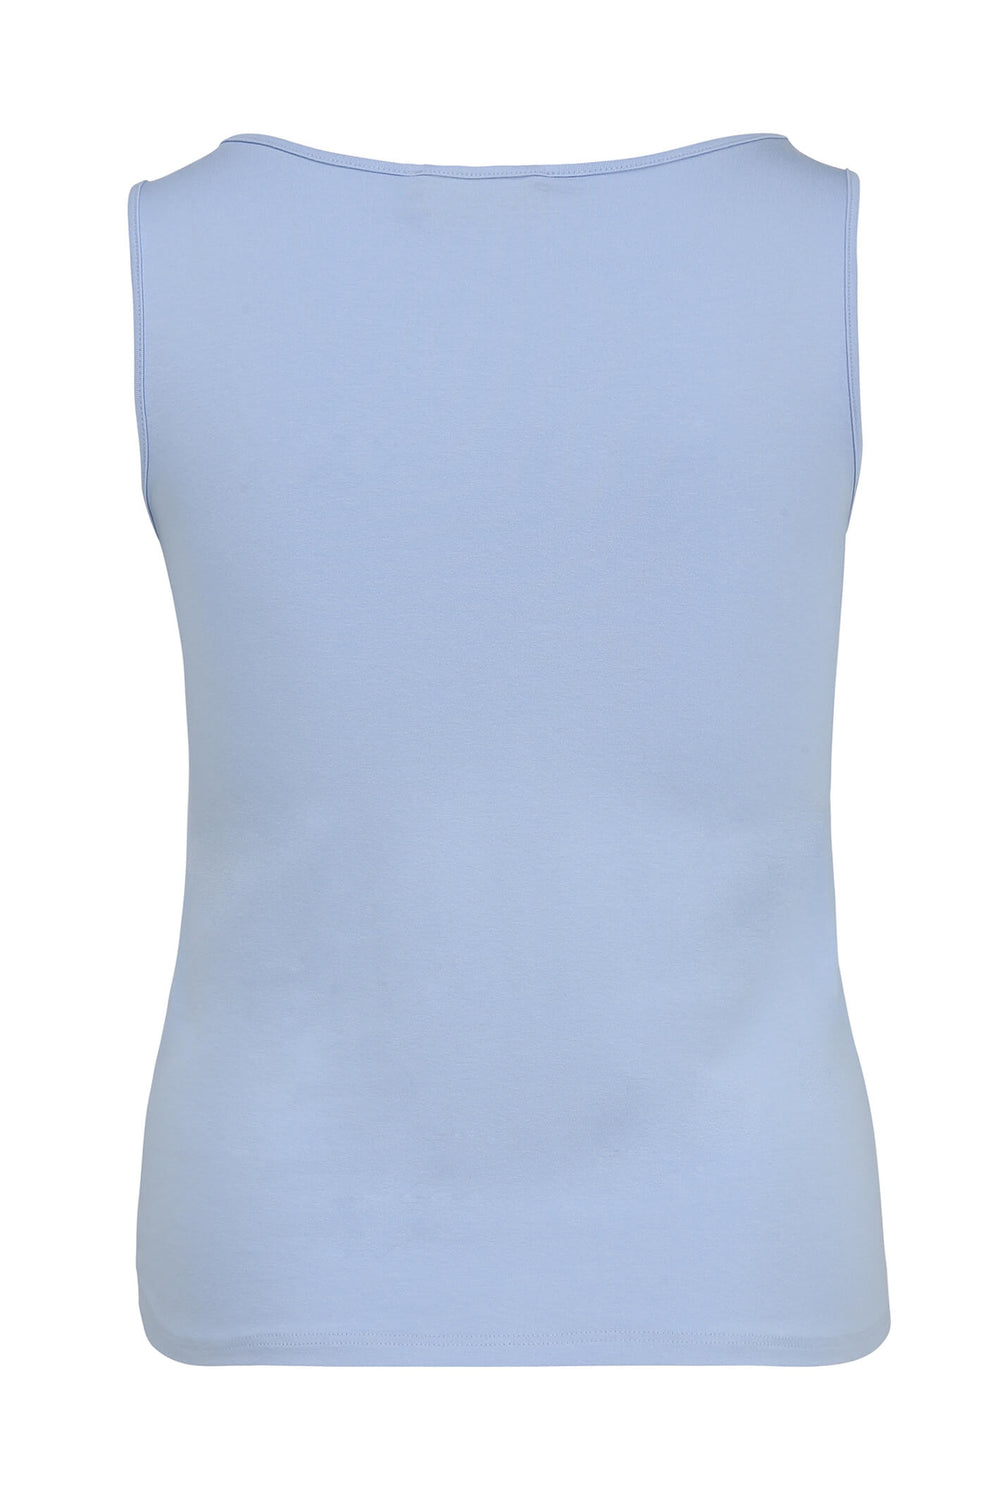 Doris Streich 555 270 55 Blue Vest Top With Diamante - Shirley Allum Boutique